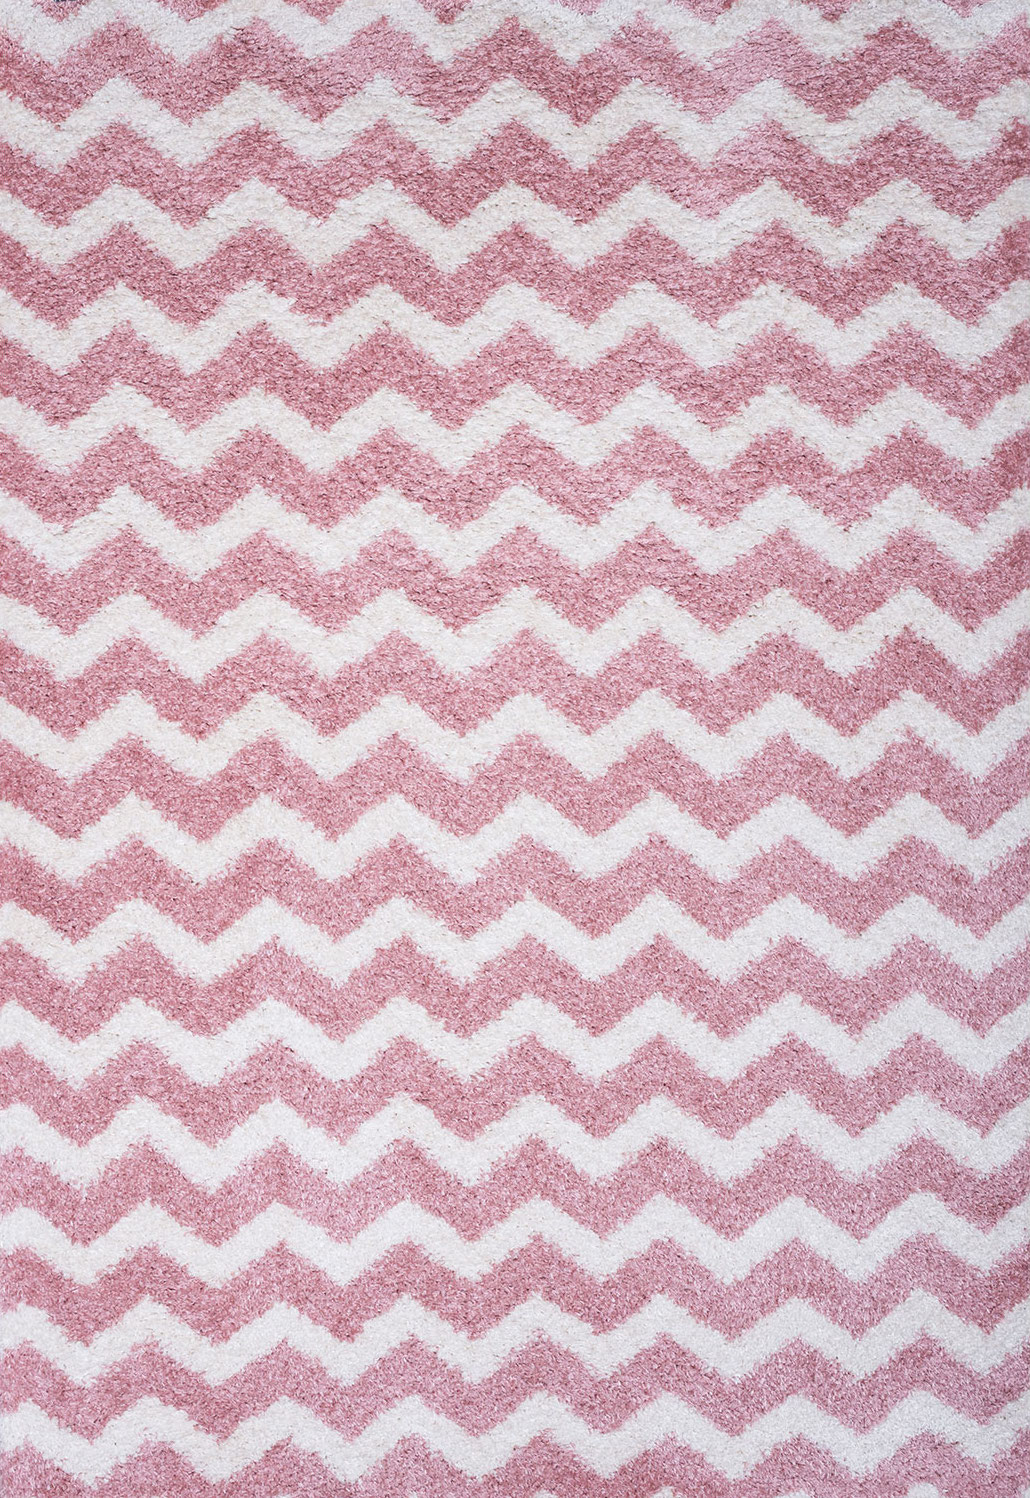 Shaggy παιδικό χαλί Cocoon 8396/55 ροζ με ζικ ζακ ρίγες - 1,40x2,00 Colore Colori